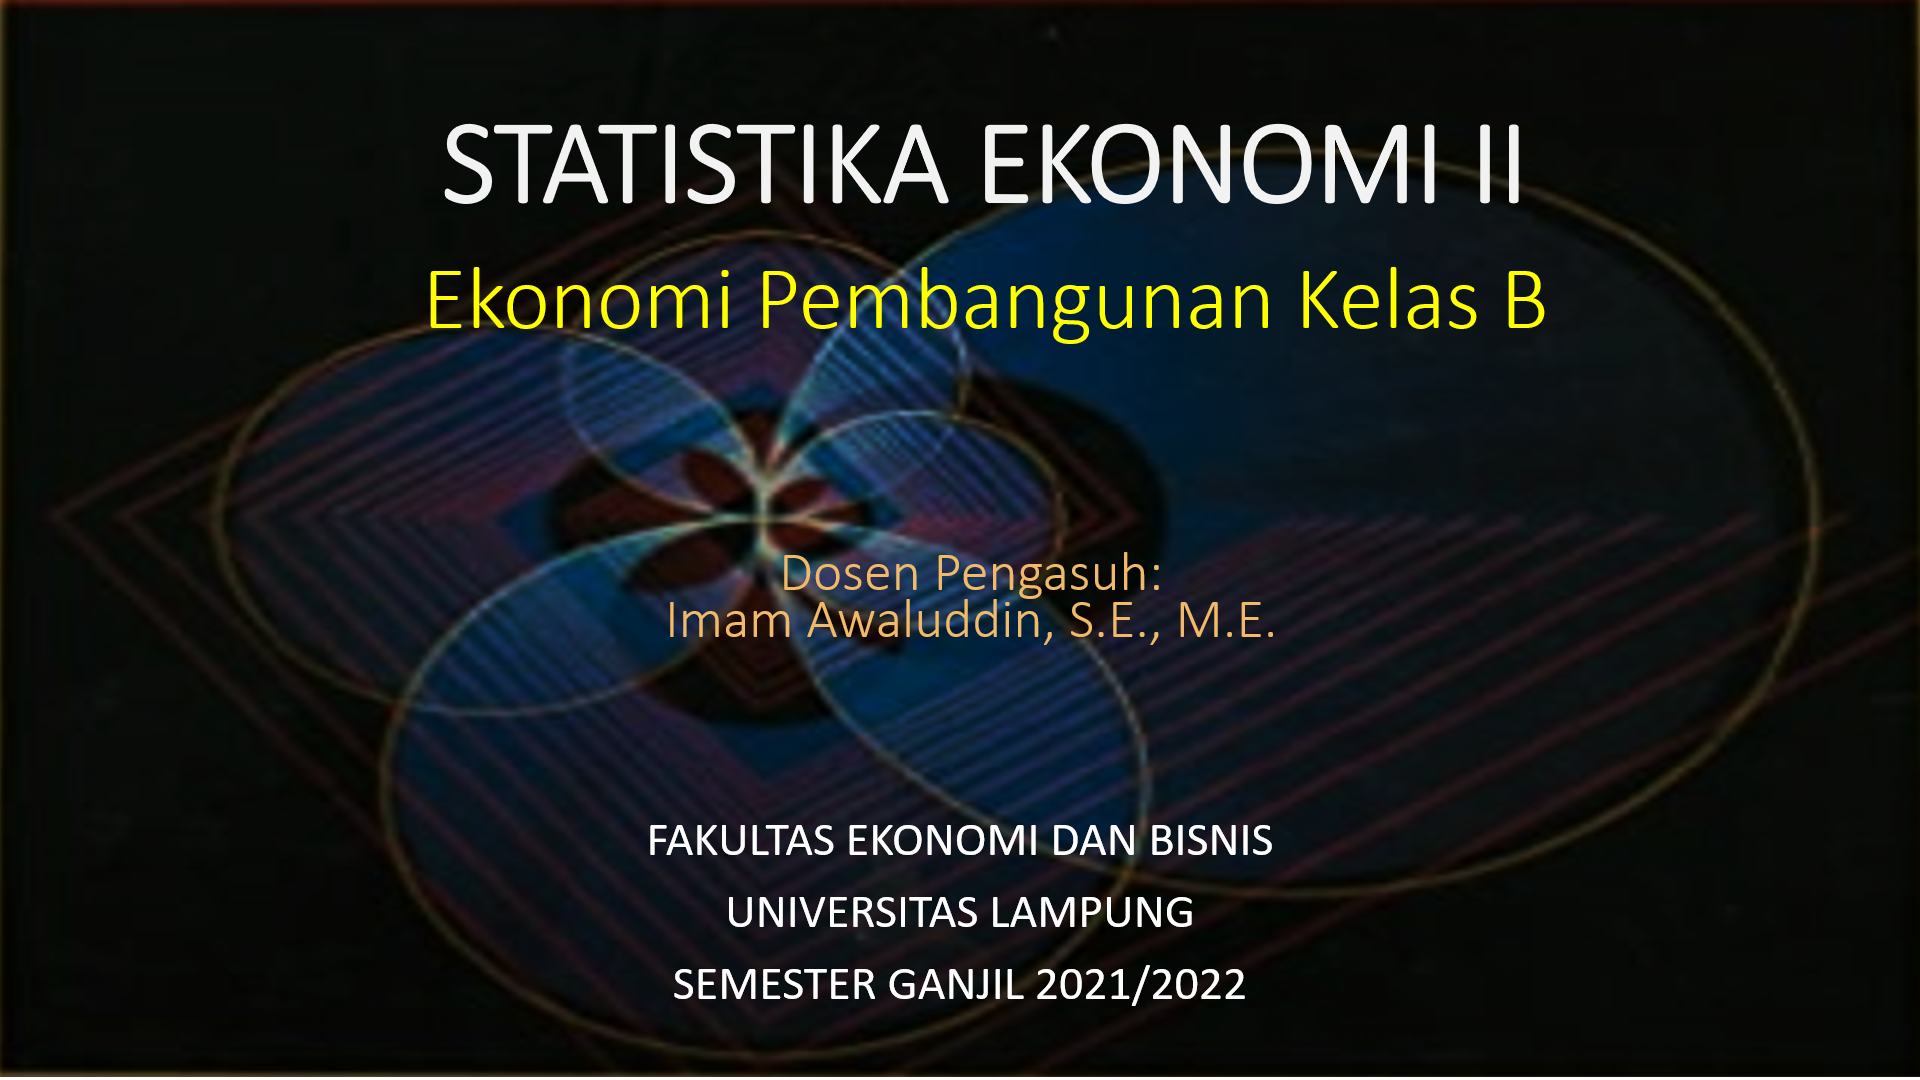 S1 EP STATISTIKA EKONOMI II KELAS B GANJIL 2021/2022